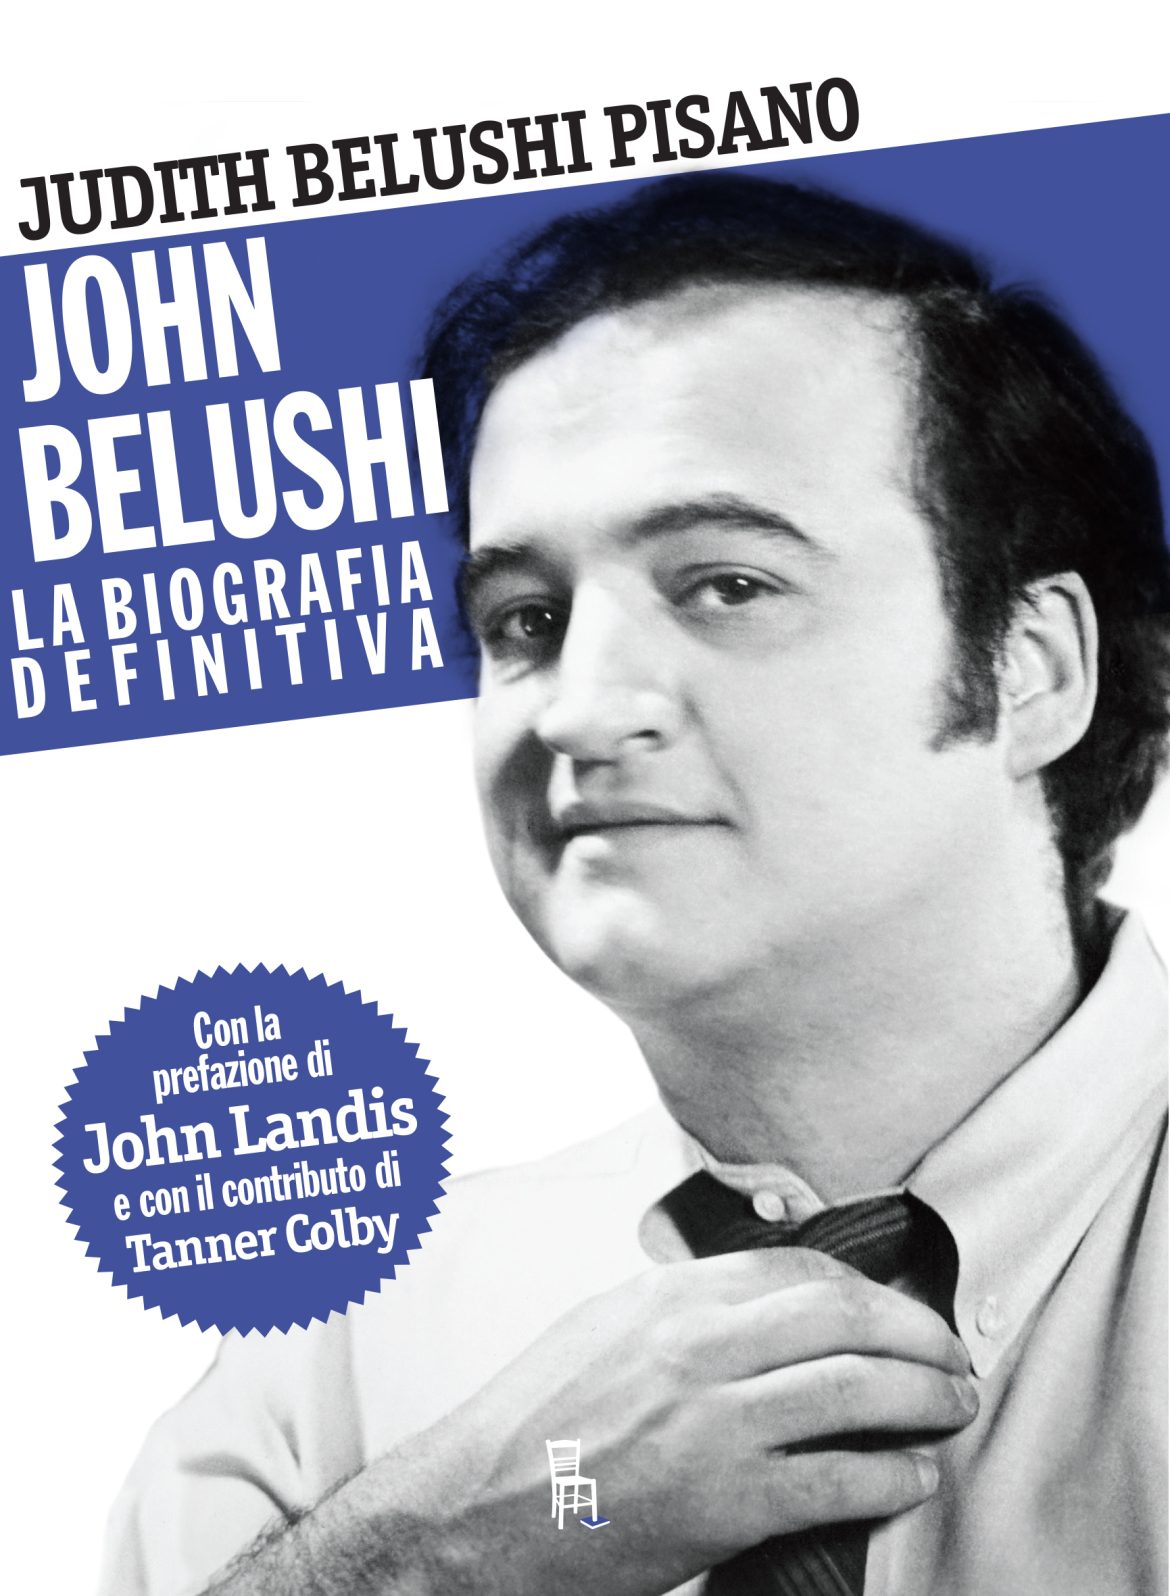 Recensione di John Belushi – Judith Belushi Pisano